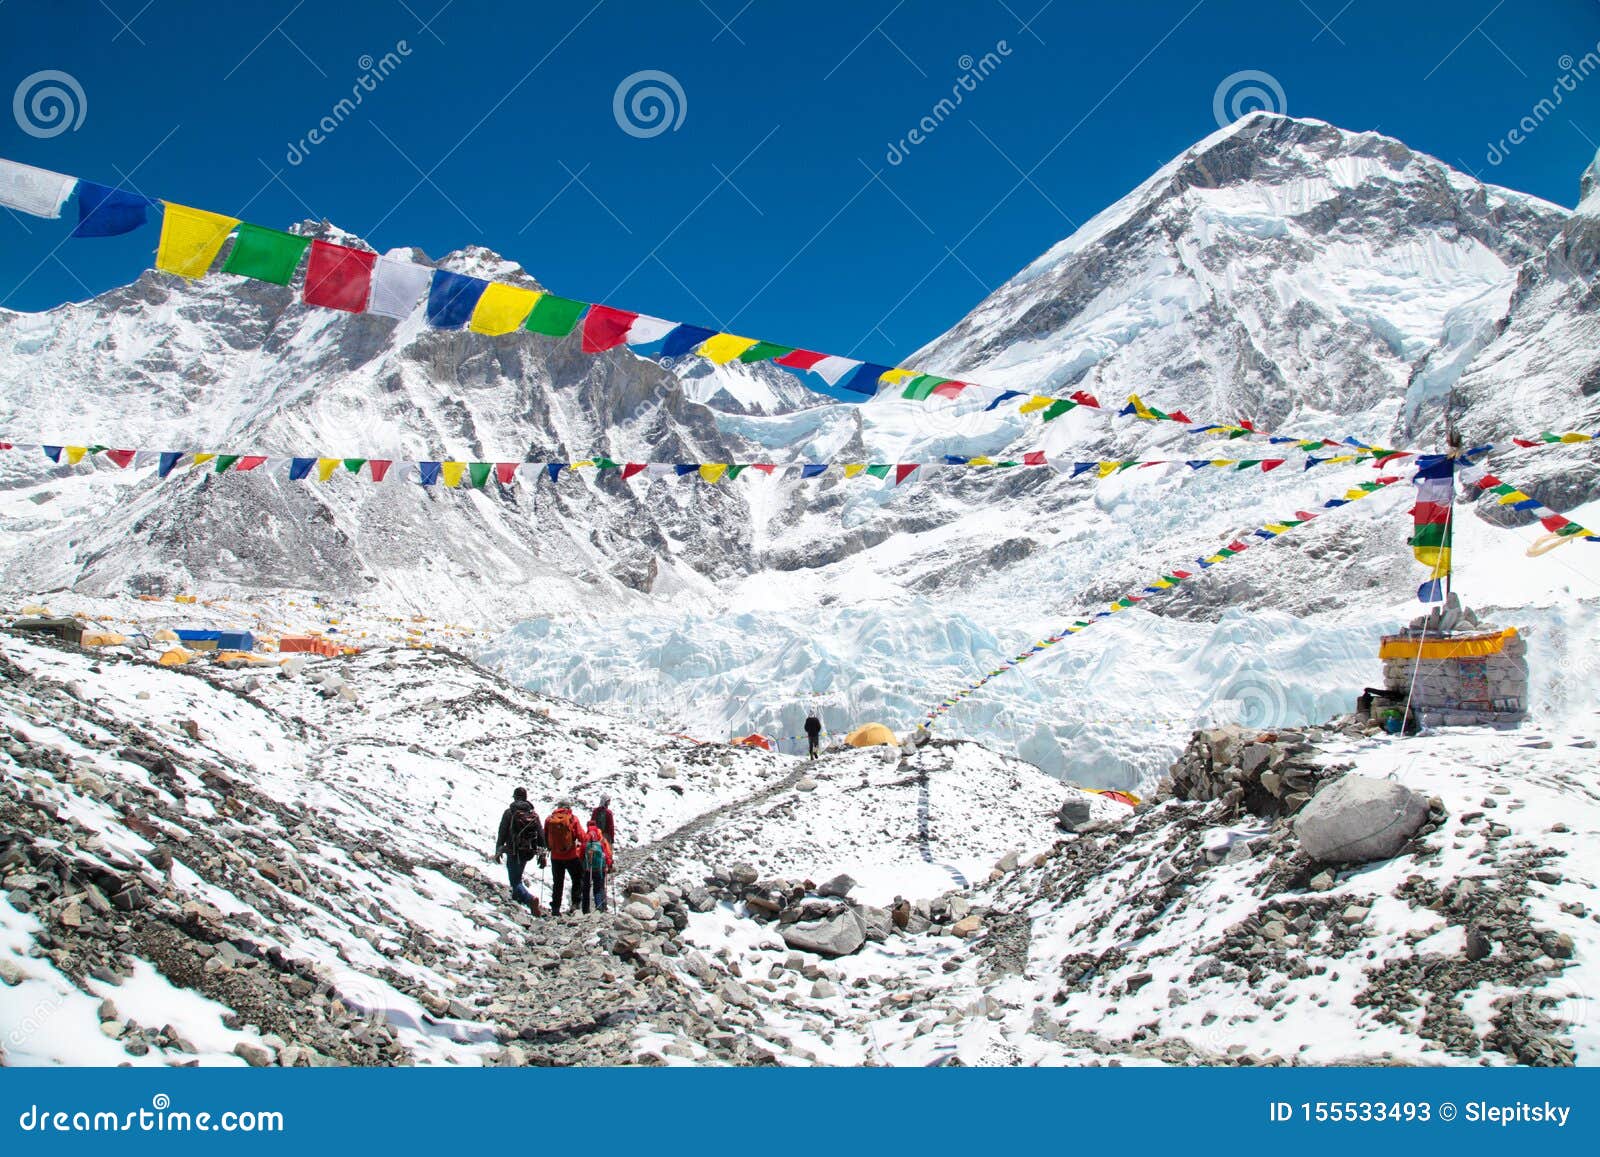 mount everest base camp, tents, khumbu glacier and mountains, sagarmatha national park, trek to everest base camp